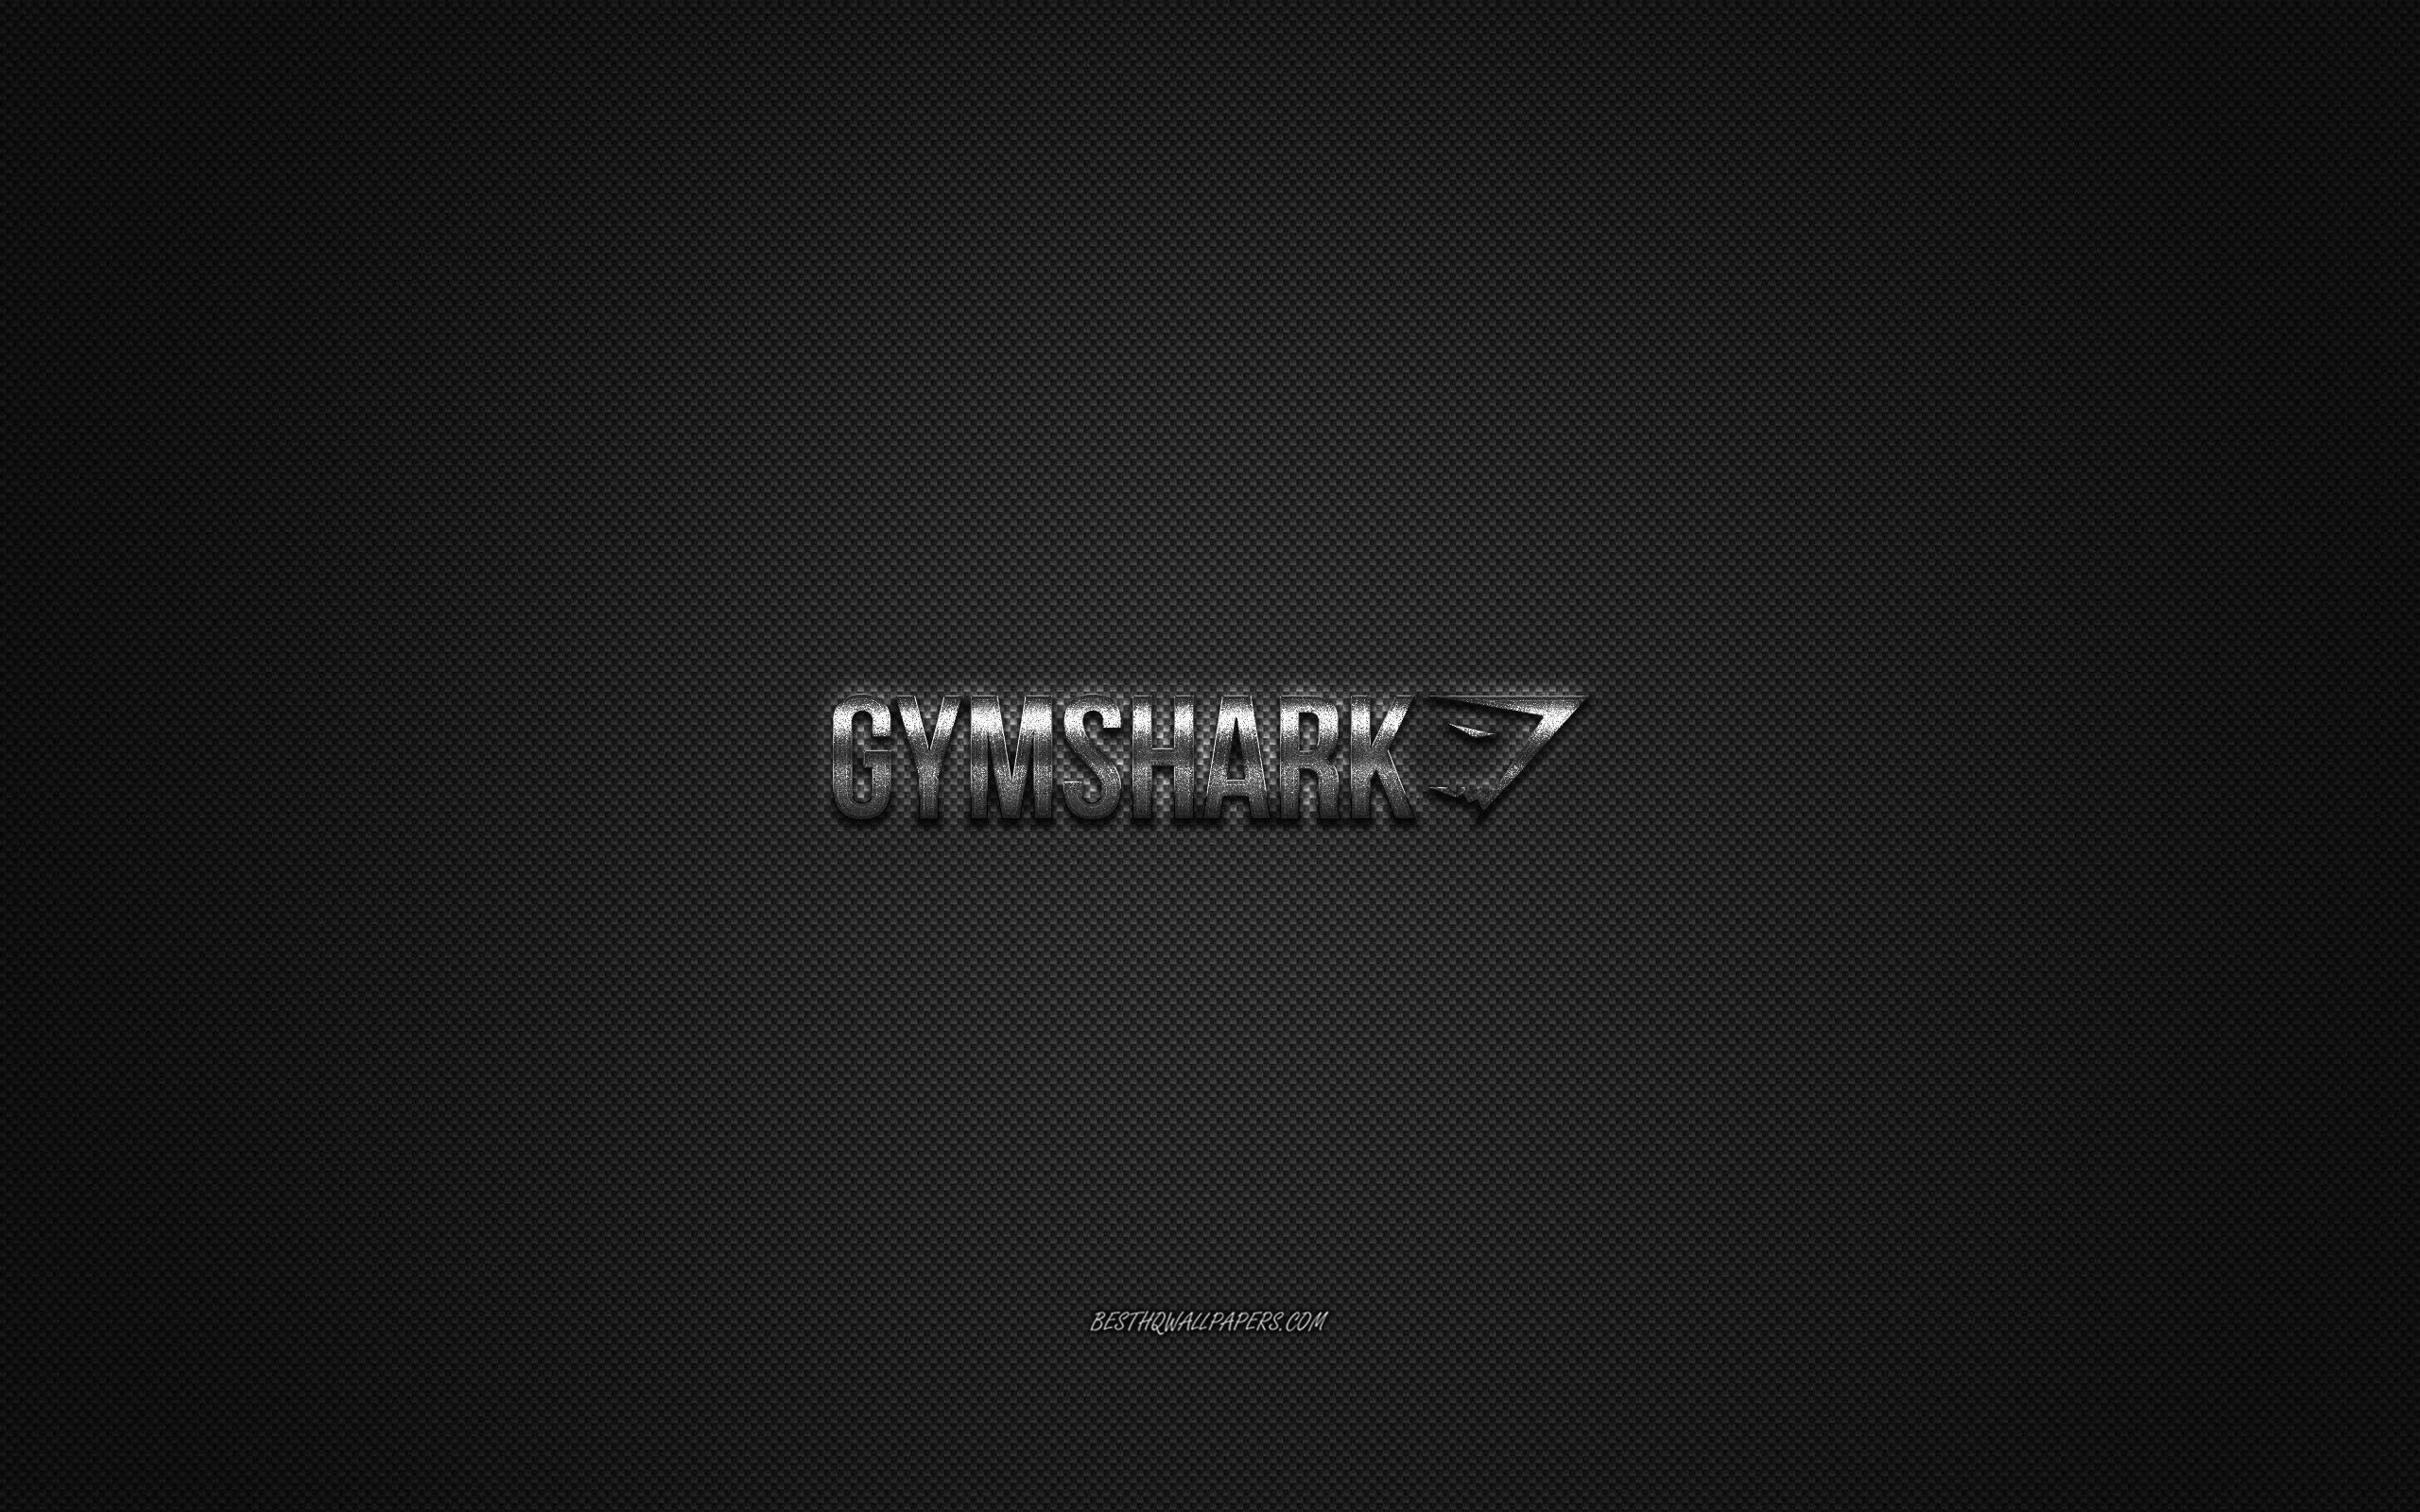 Download wallpaper Gymshark logo, metal emblem, apparel brand